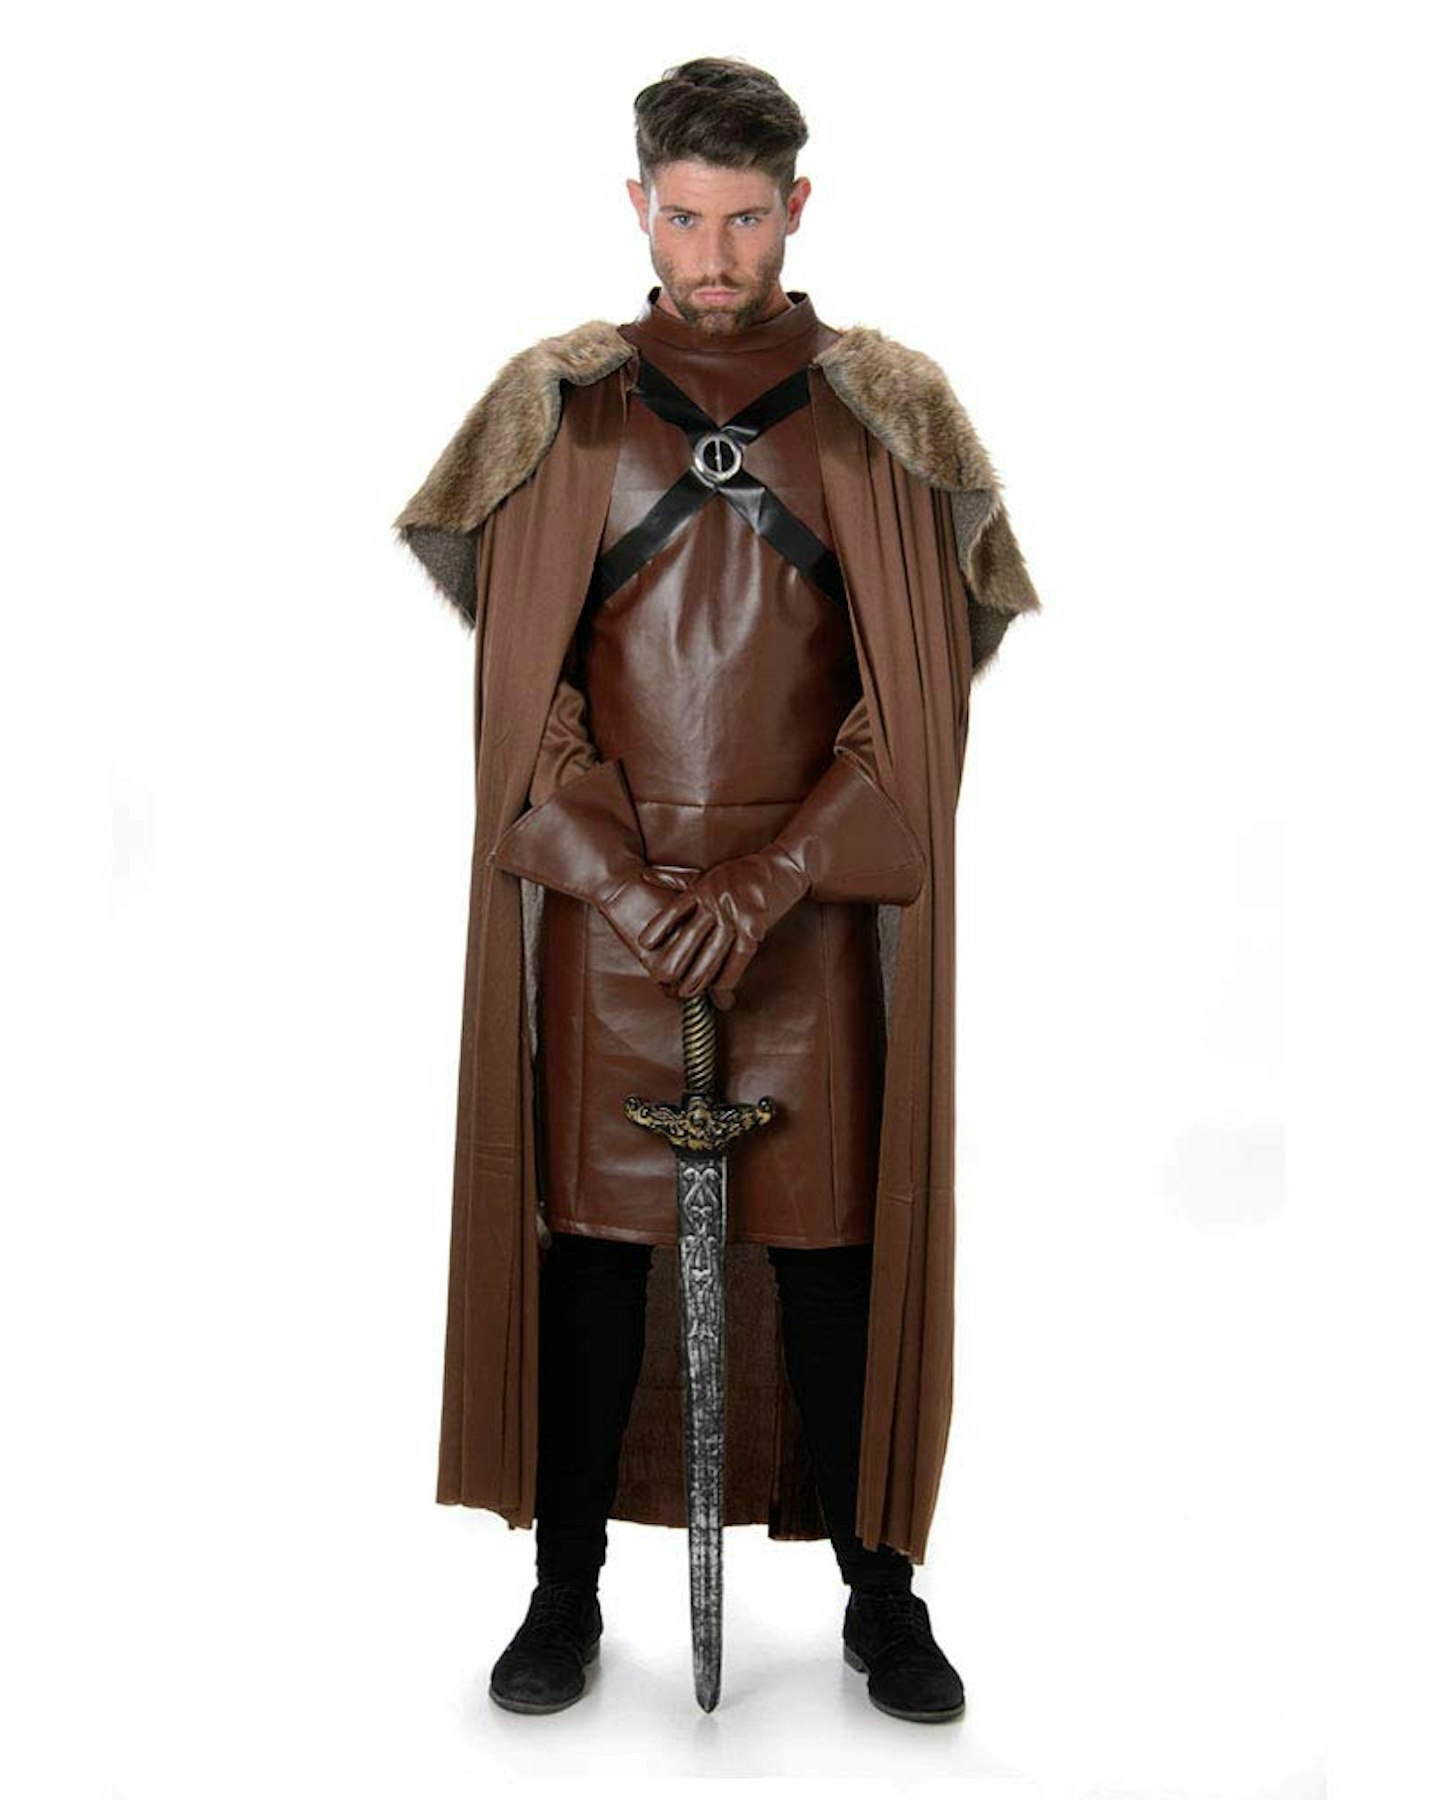 Warrior Costume, £27.99